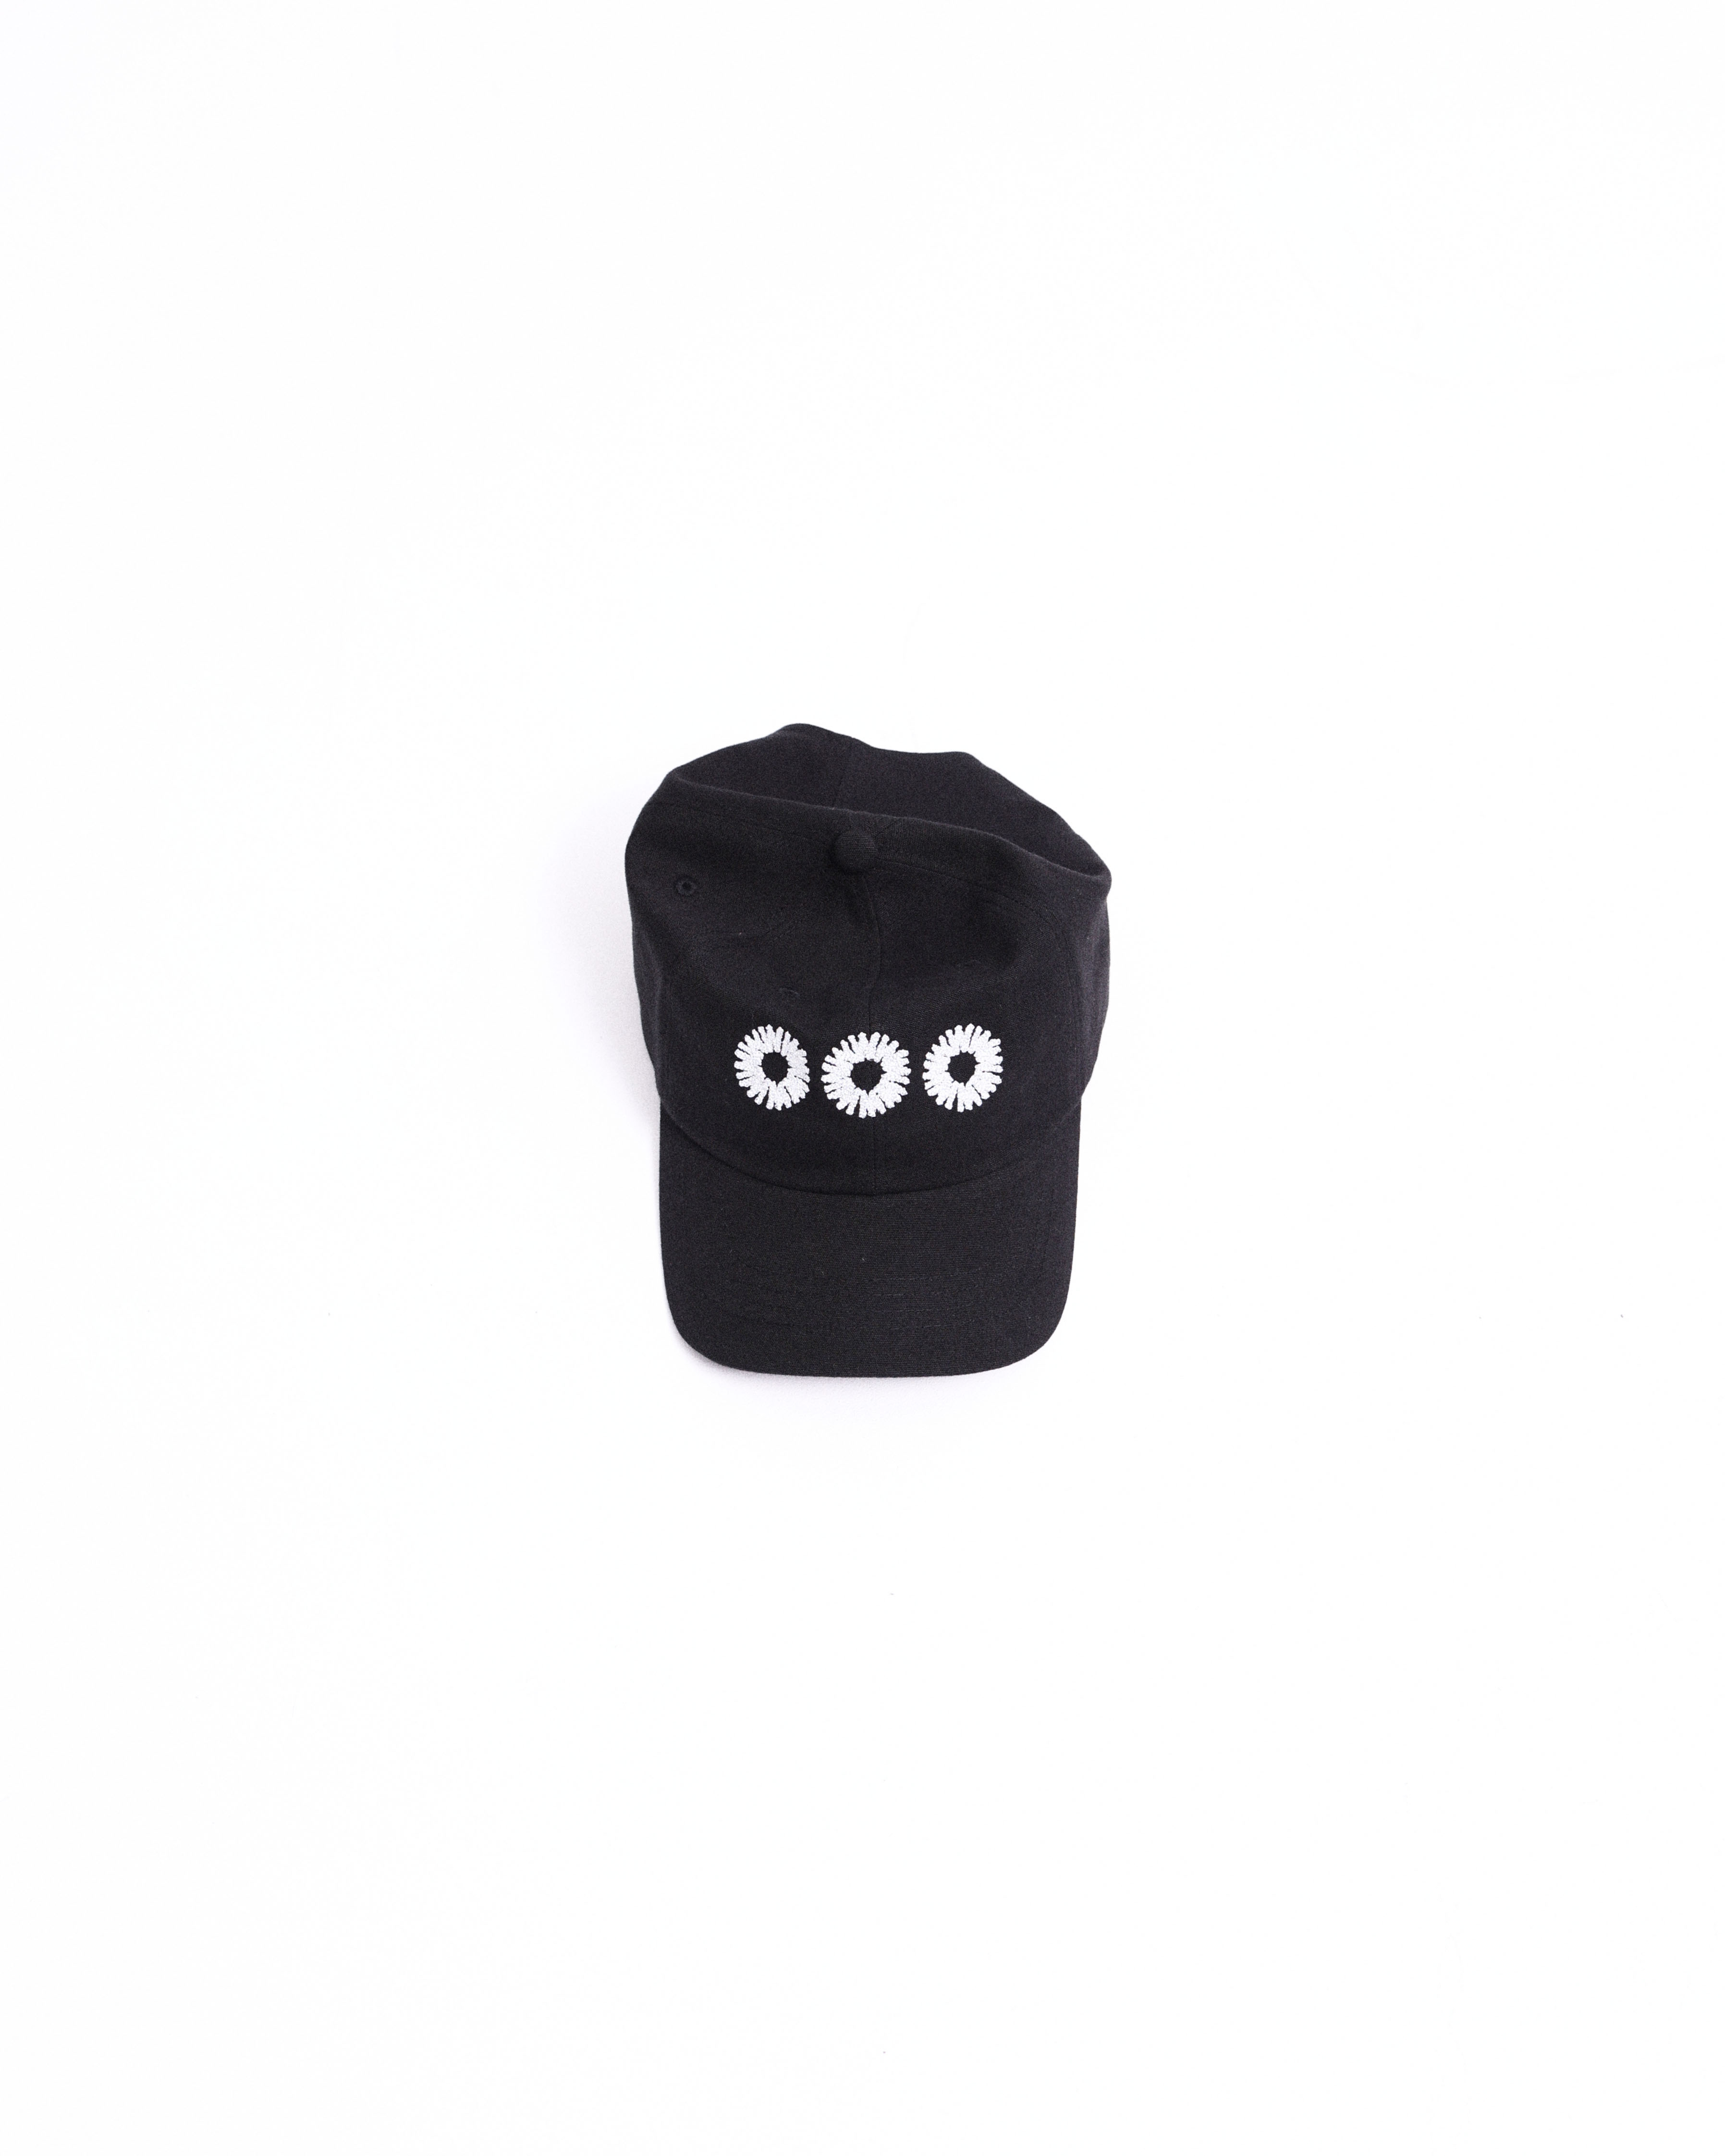 LOGO ARCHIVE CAP (BLACK)